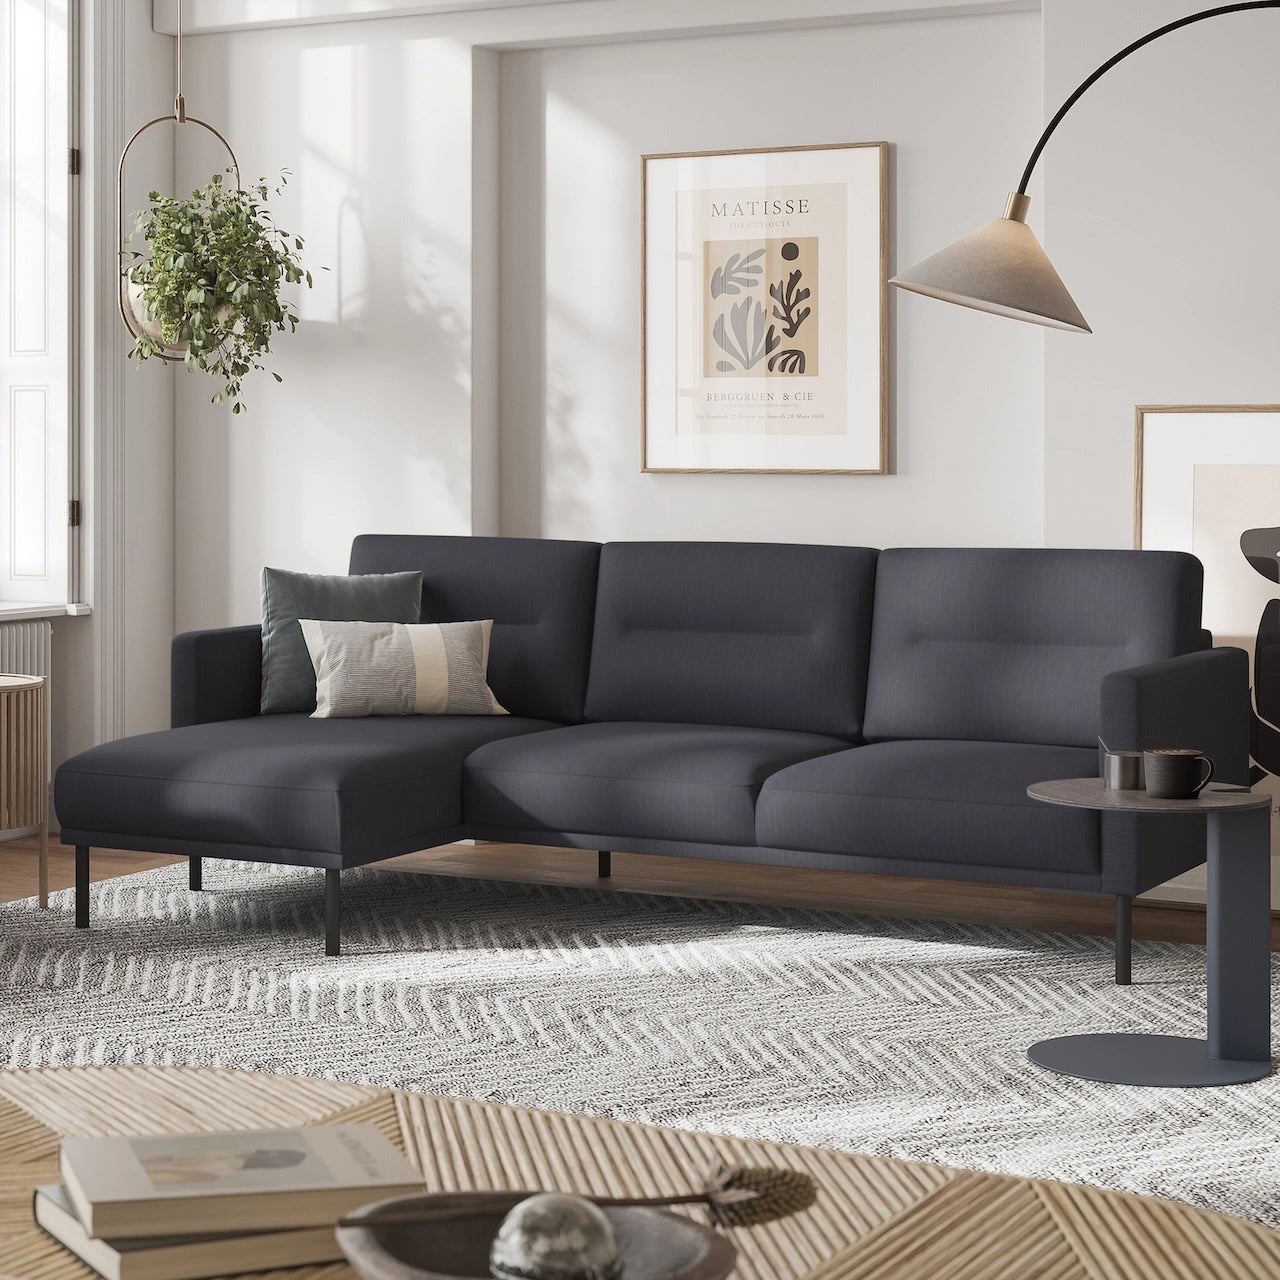 Furniture To Go Larvik Chaiselongue Sofa (LH) - Anthracite , Black Legs